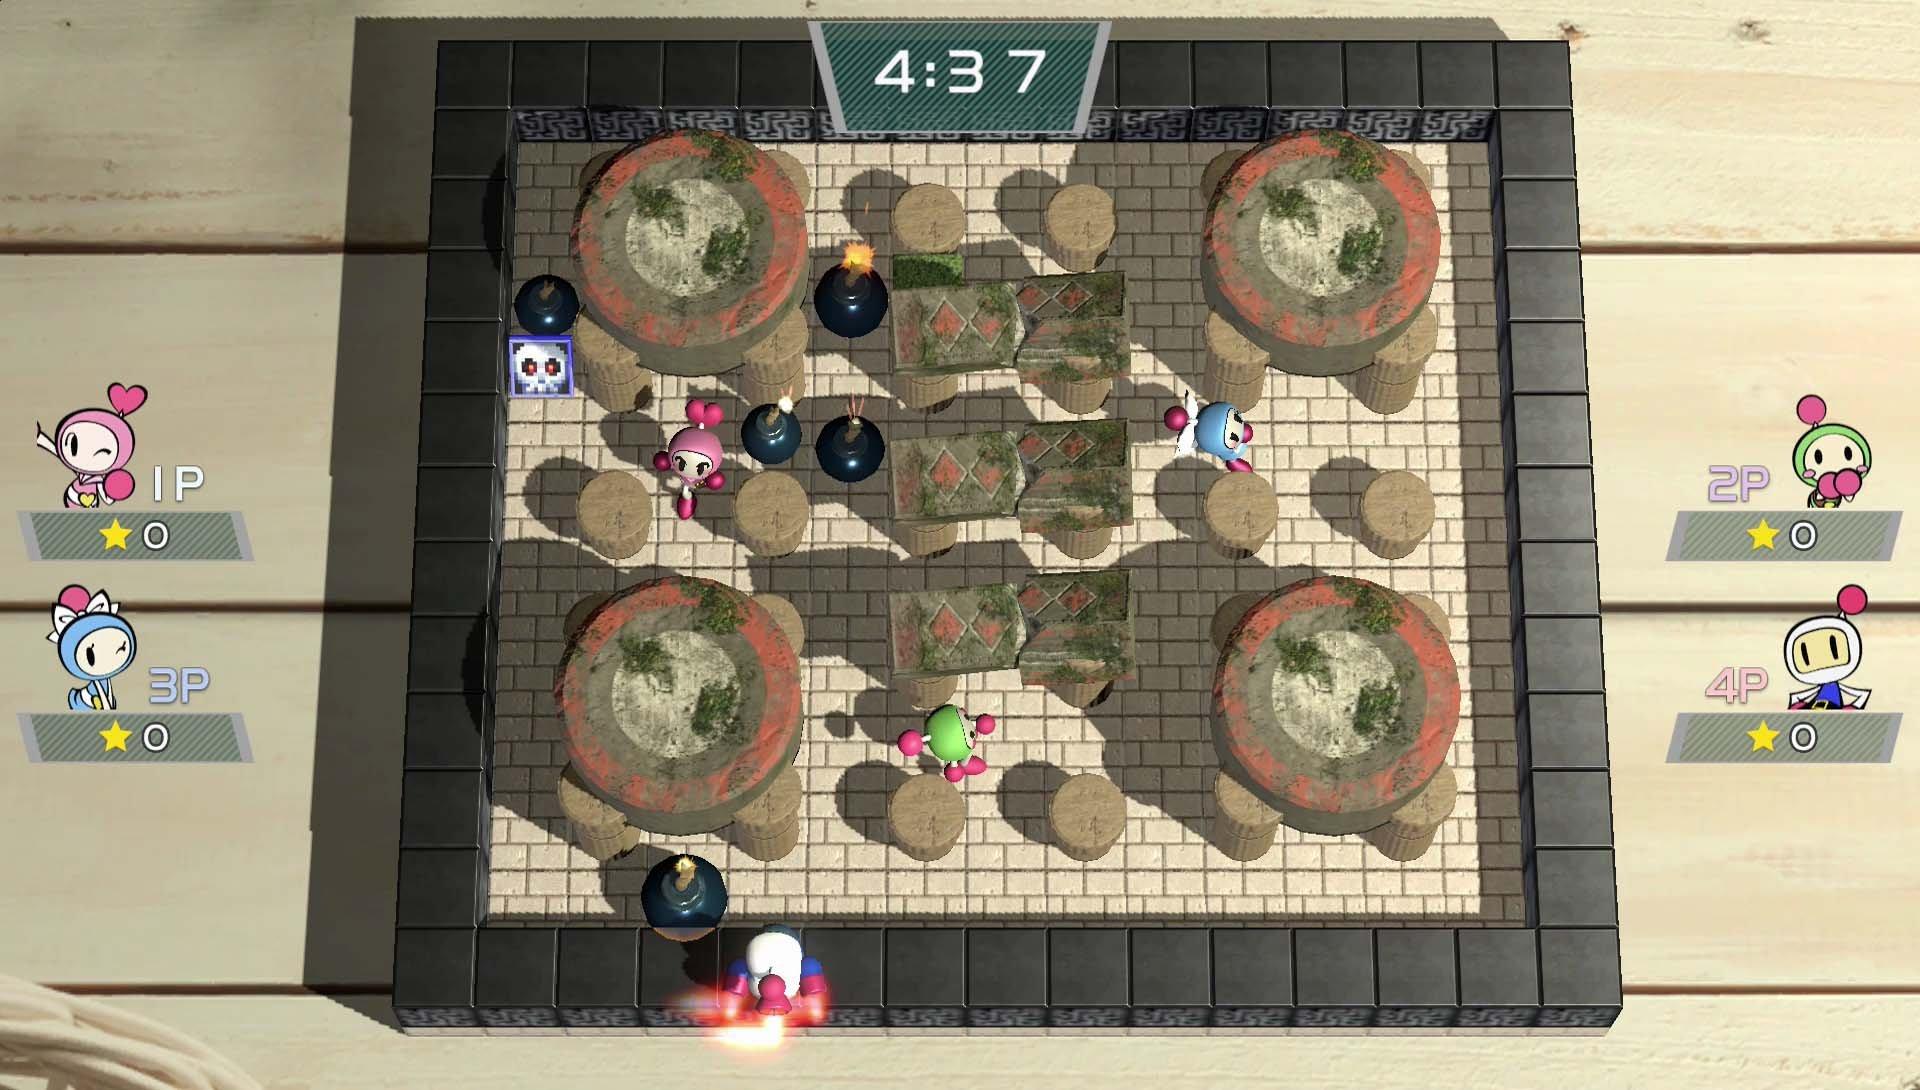 How do you control Super Bomberman R on a Nintendo Switch? – KONAMI Games